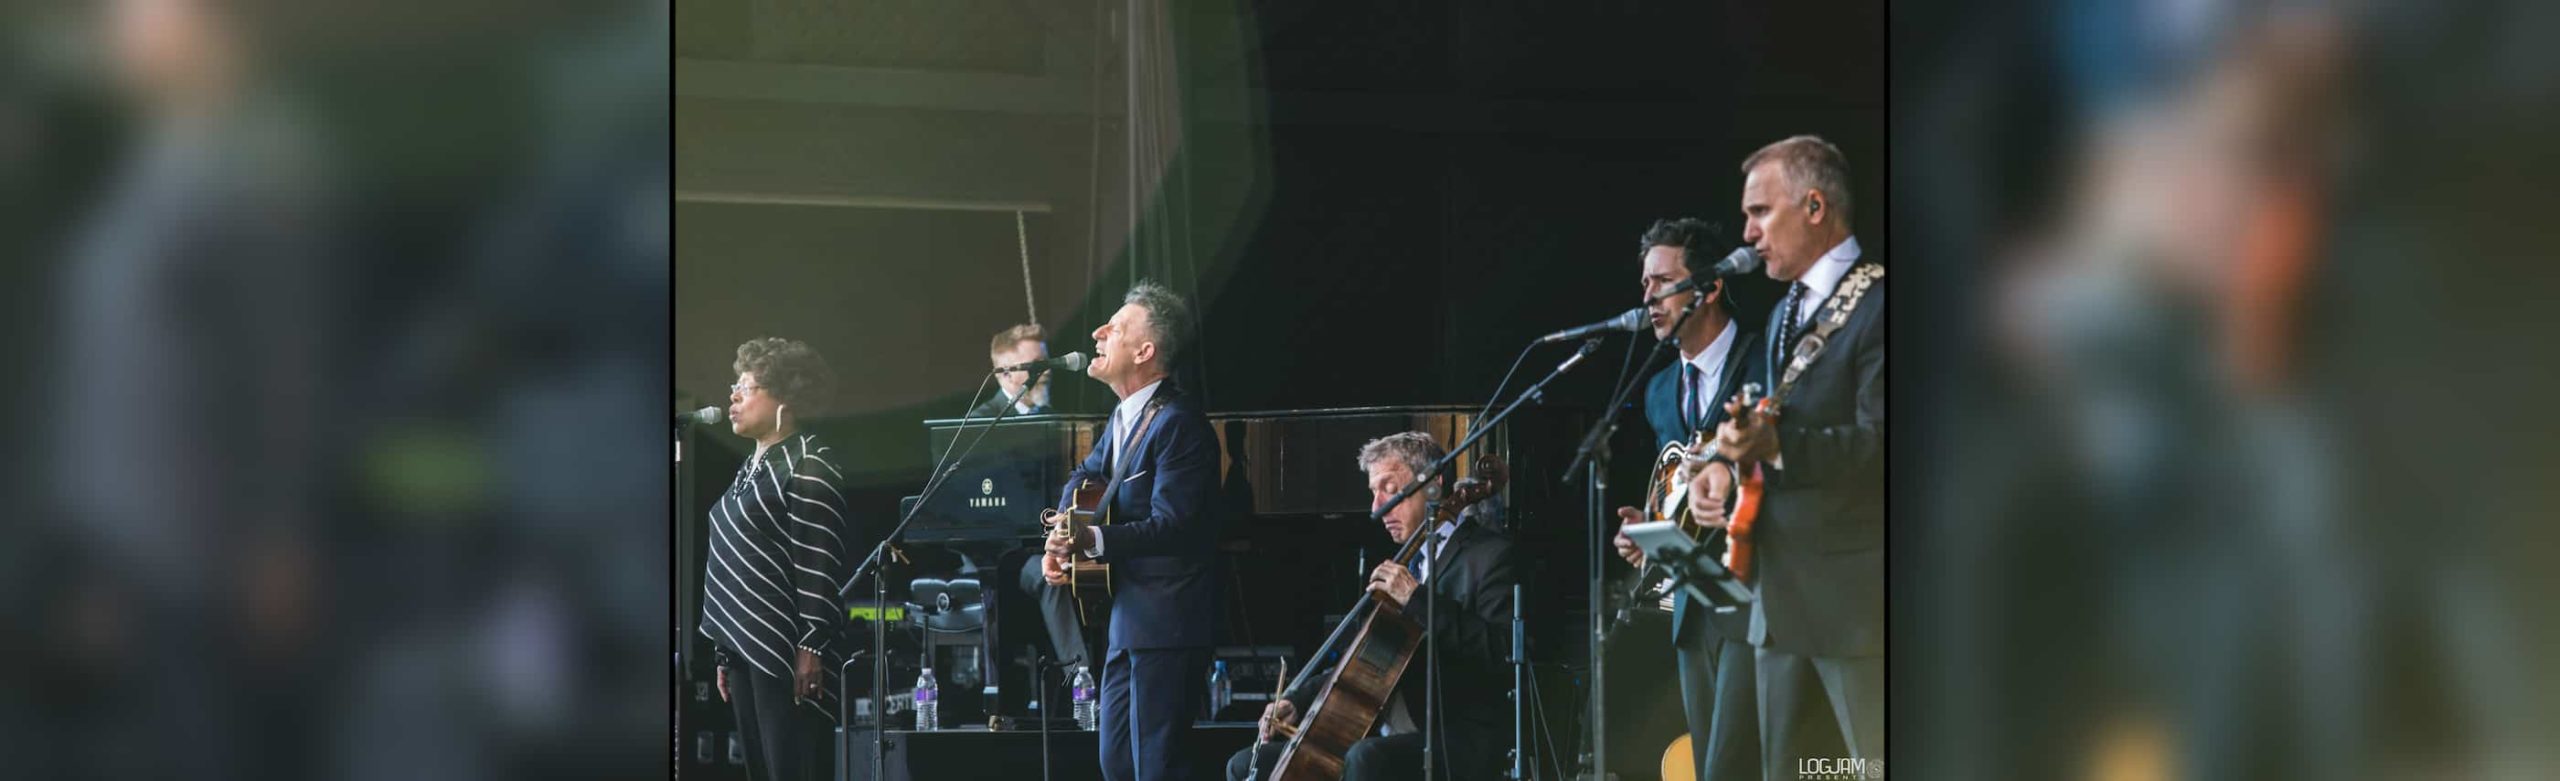 Grammy Award Winner Lyle Lovett Will Return to Montana with Large Band Image